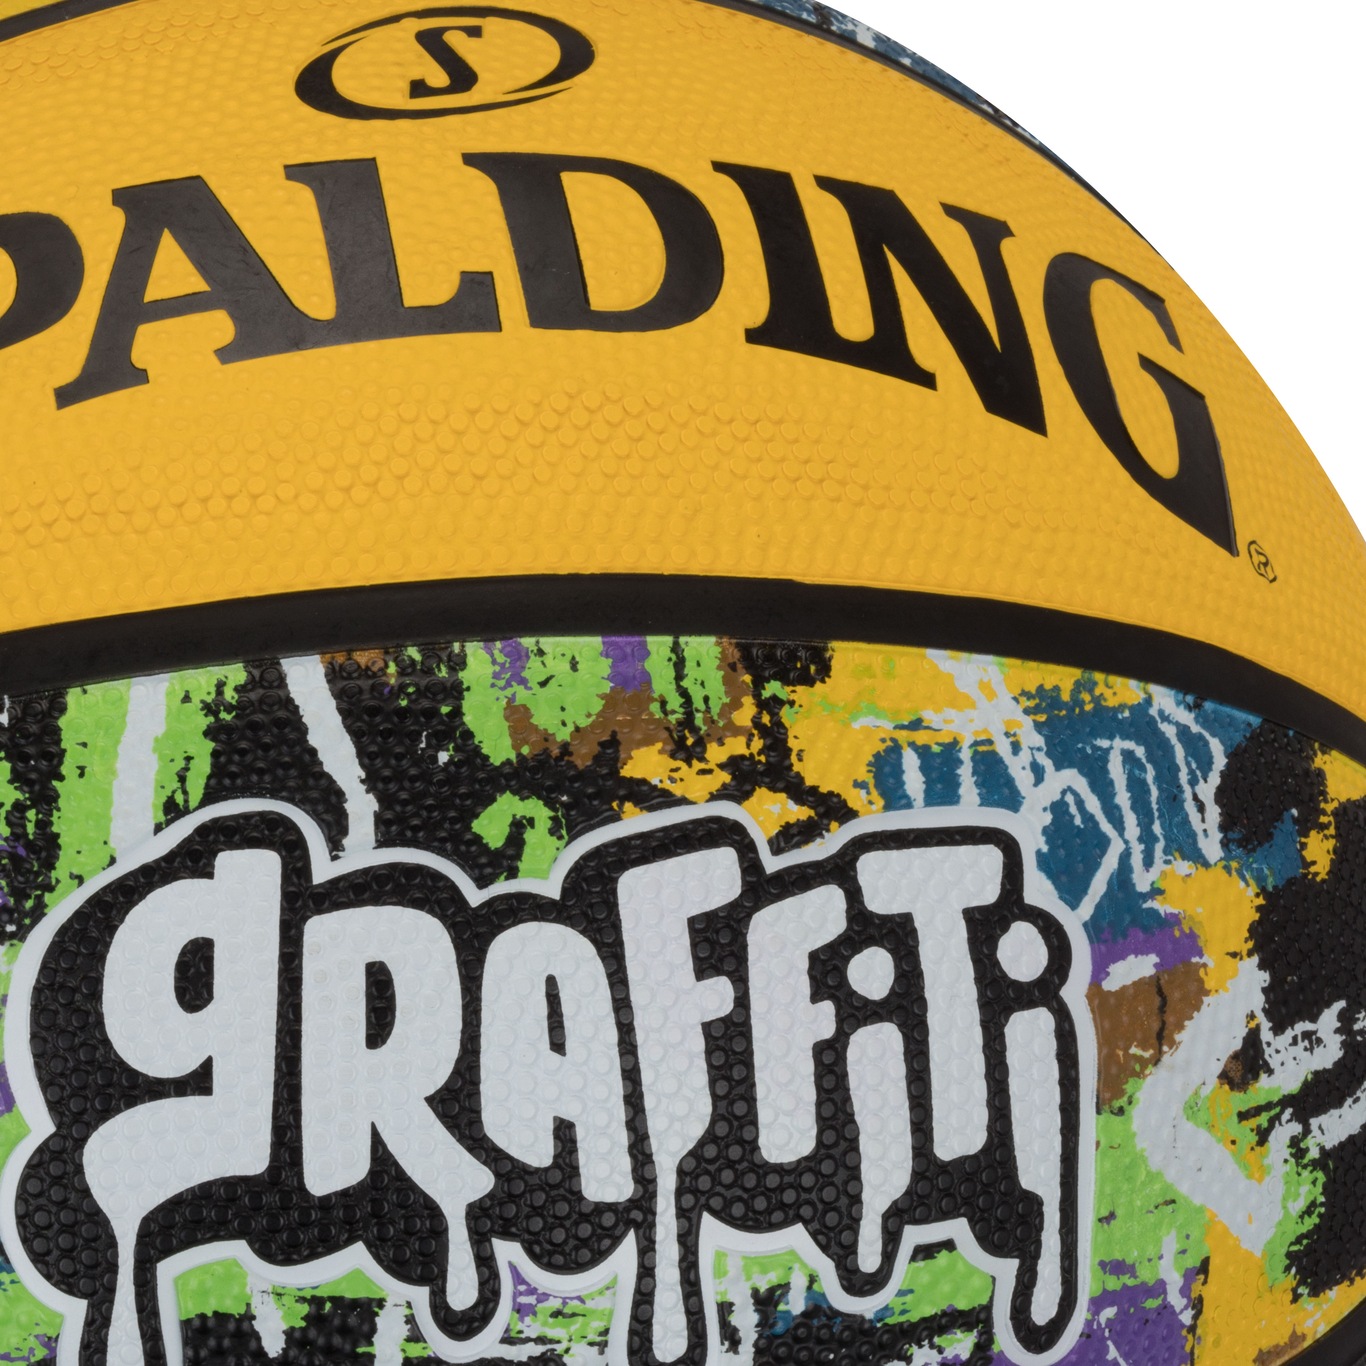 Bola De Basquete Spalding Graffiti - Amarelo - spalding